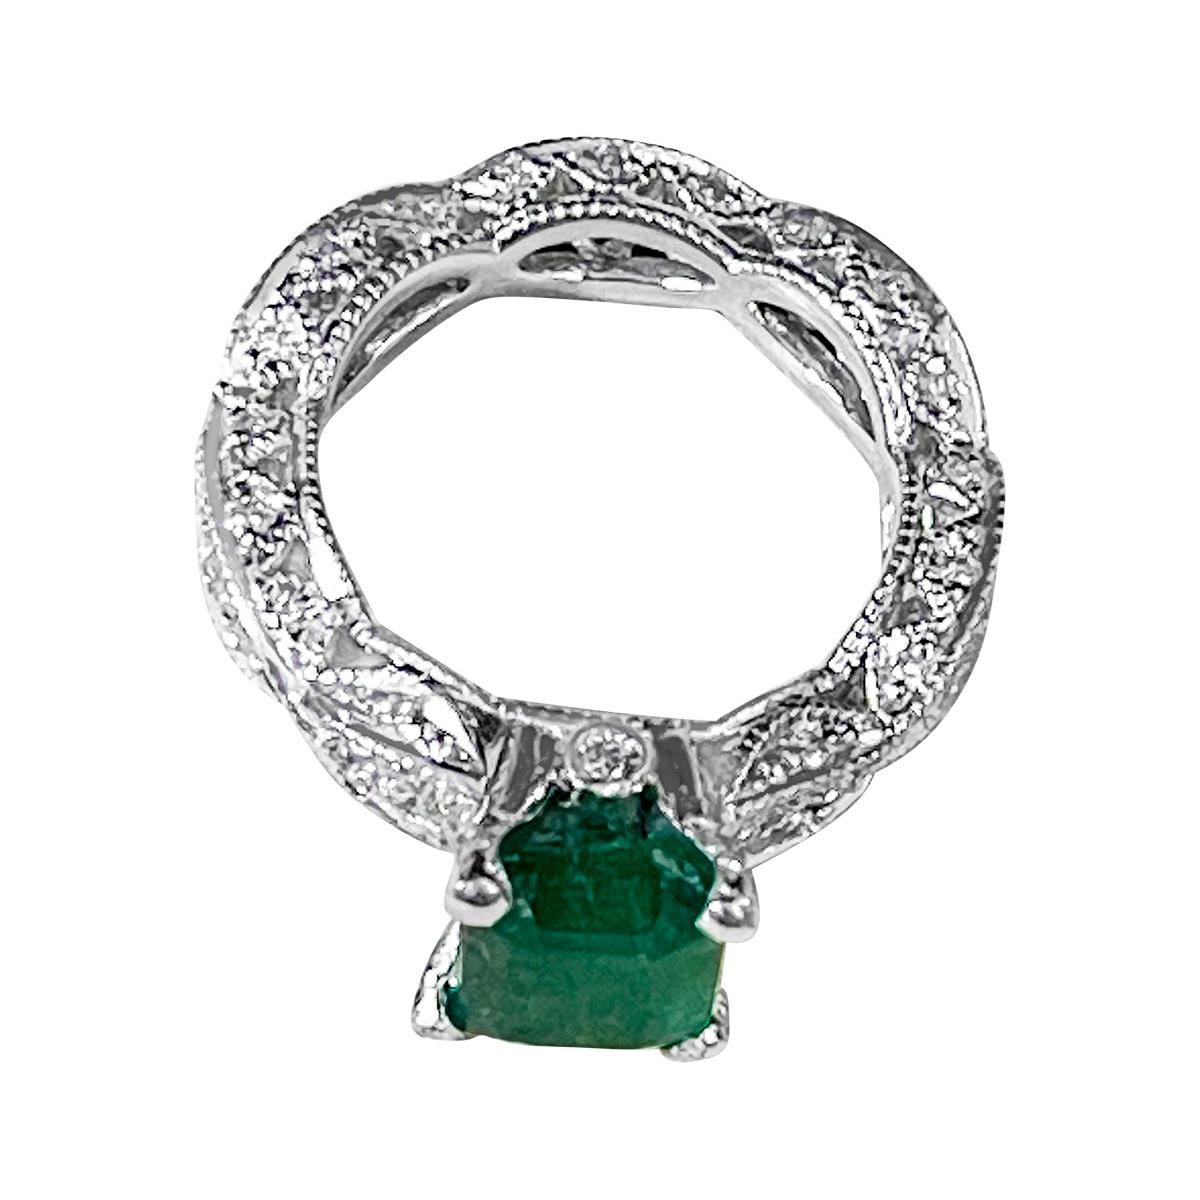 2 Carat Natural Emerald Cut Emerald & 0.85 Ct Diamond Ring in Platinum